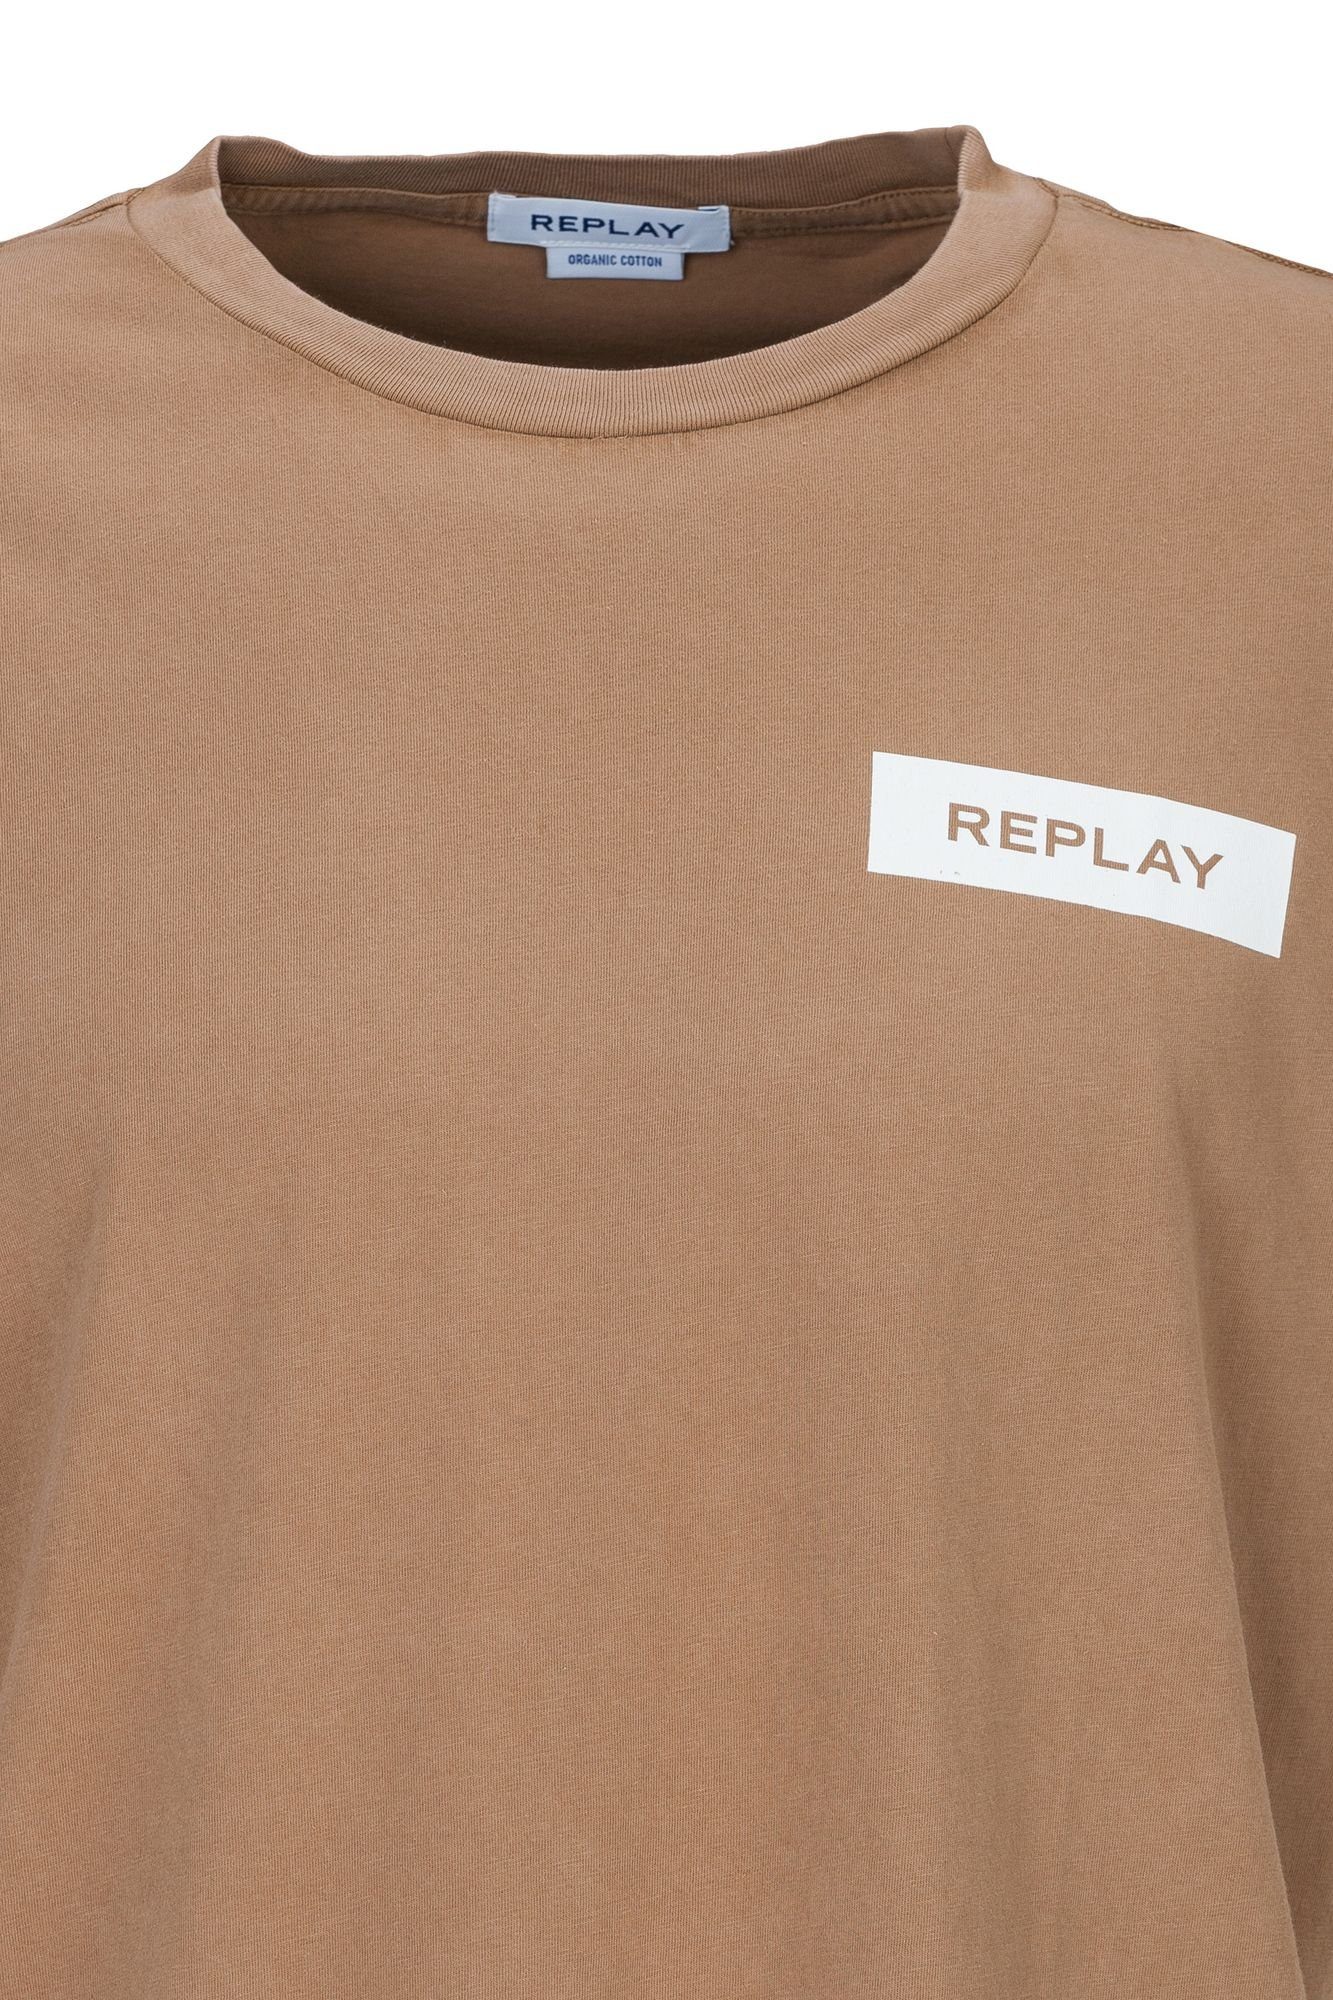 G. ORGANIC Replay T-Shirt DYED COTTON JERSEY